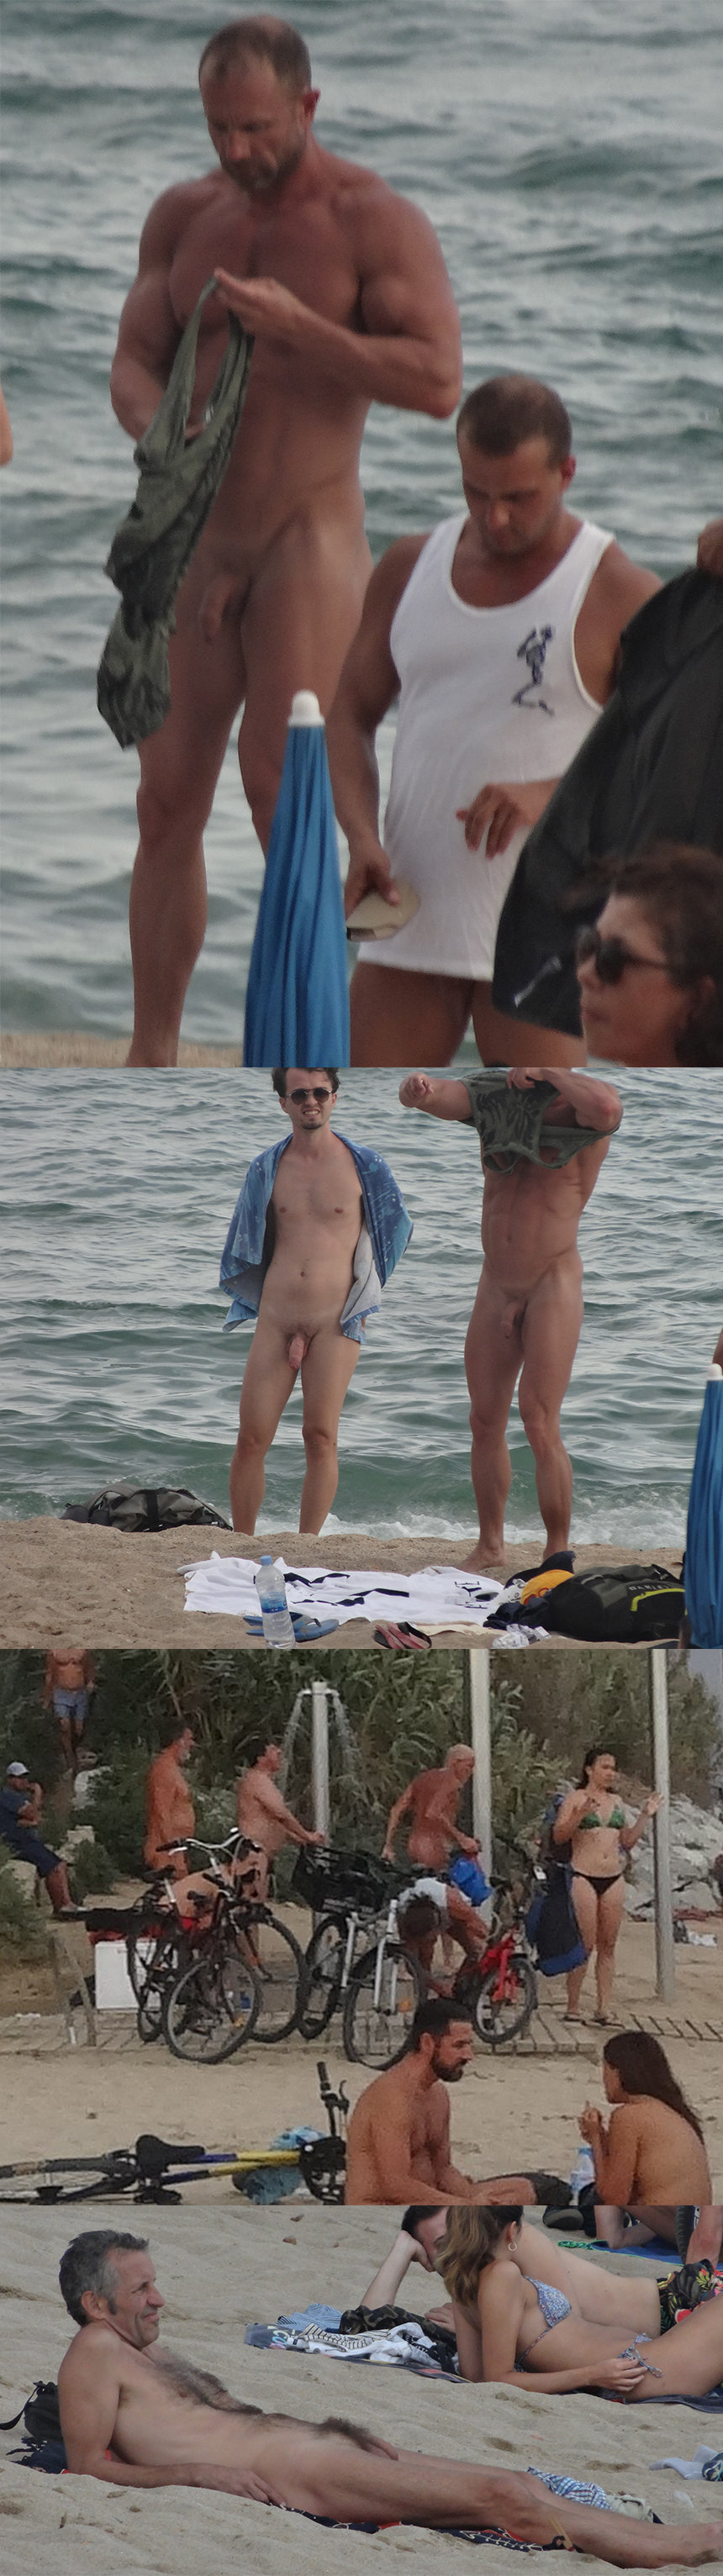 nudist guys caught barcelona beach